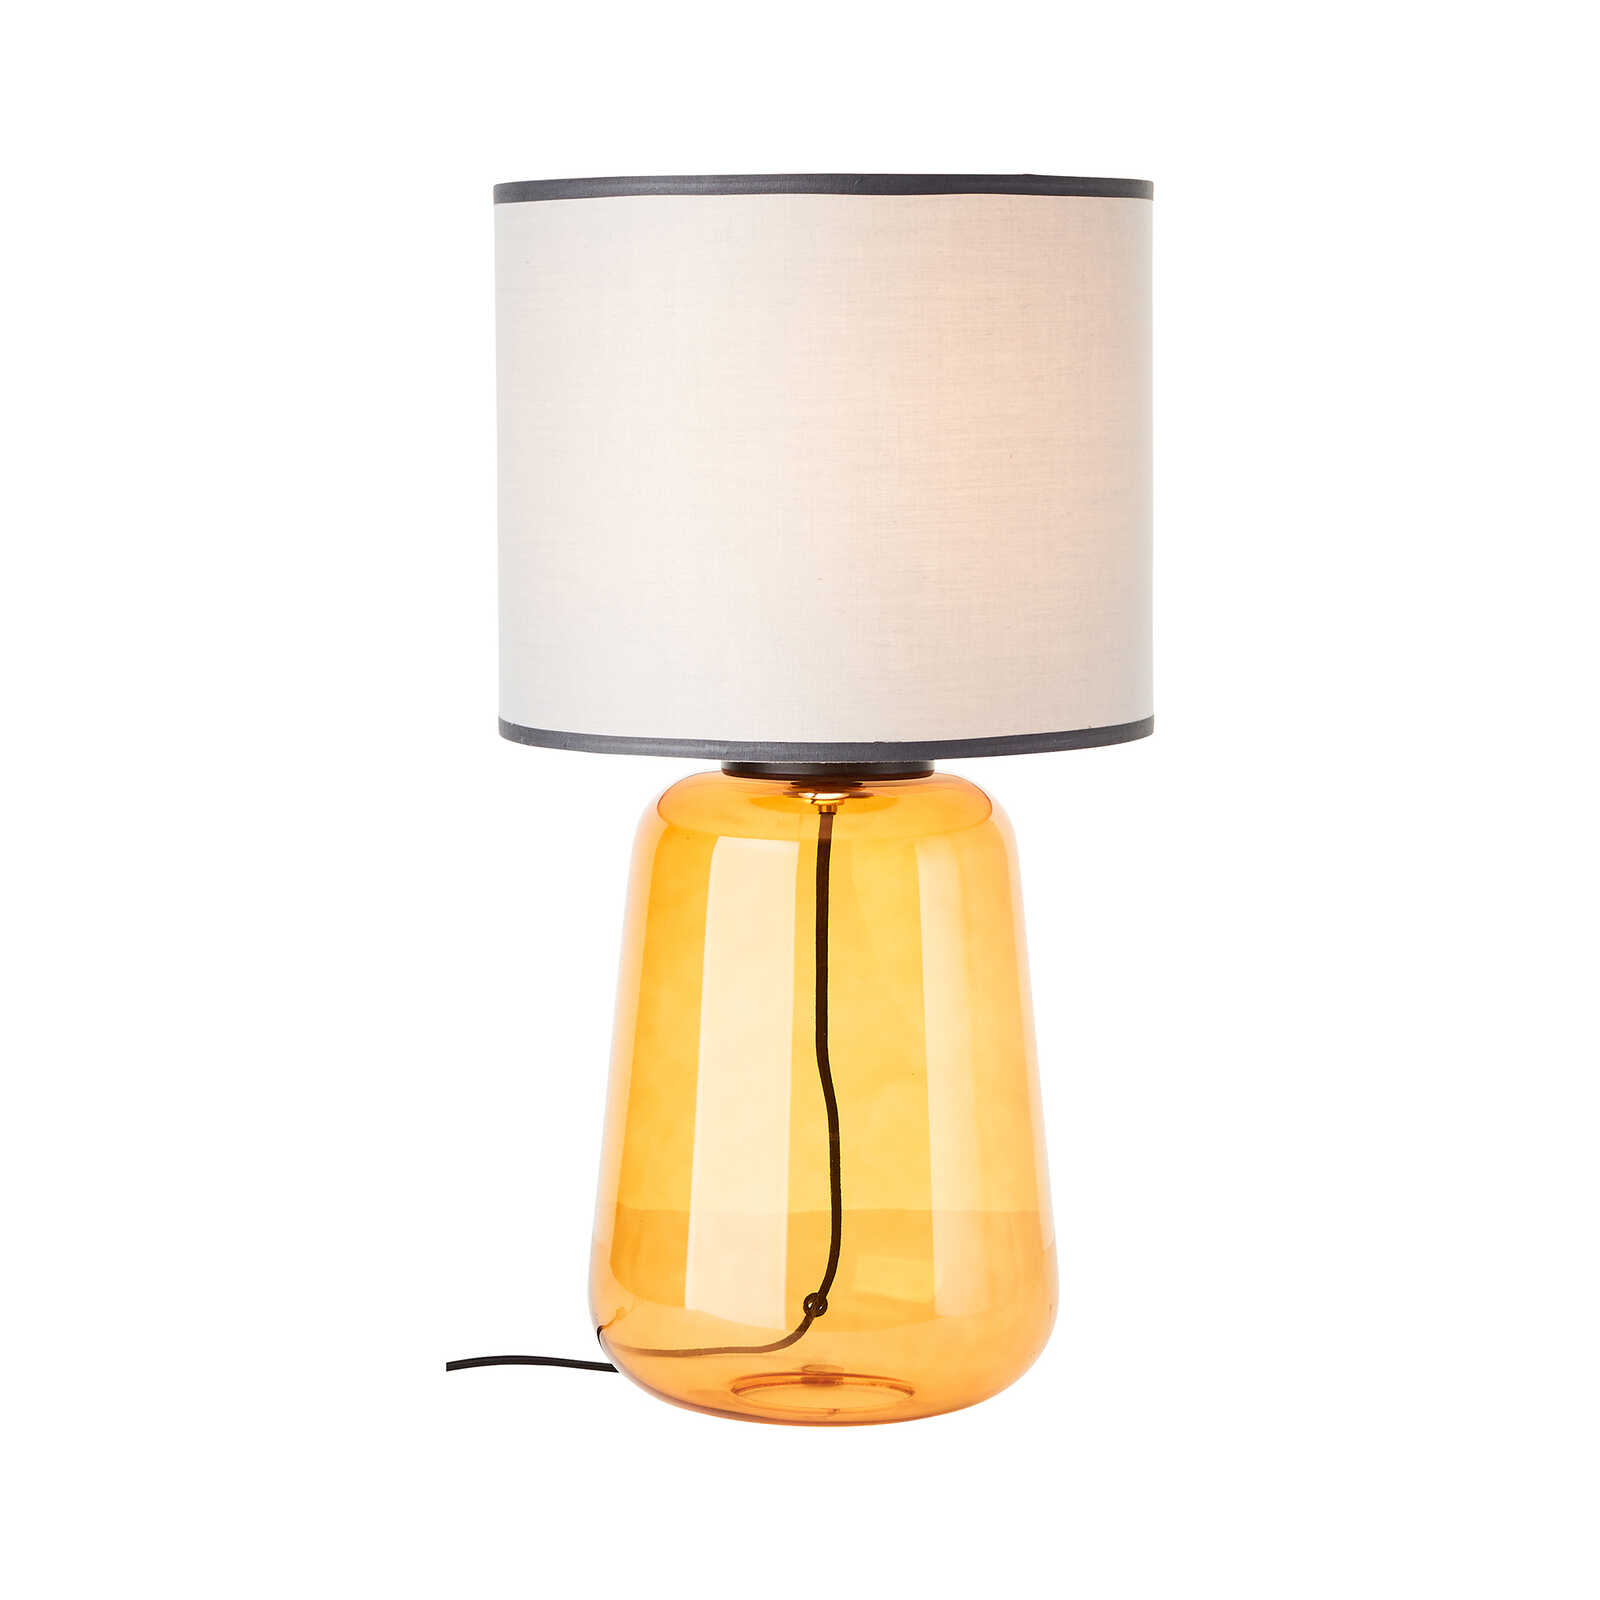 Textile table lamp - Jana 2 - Yellow
